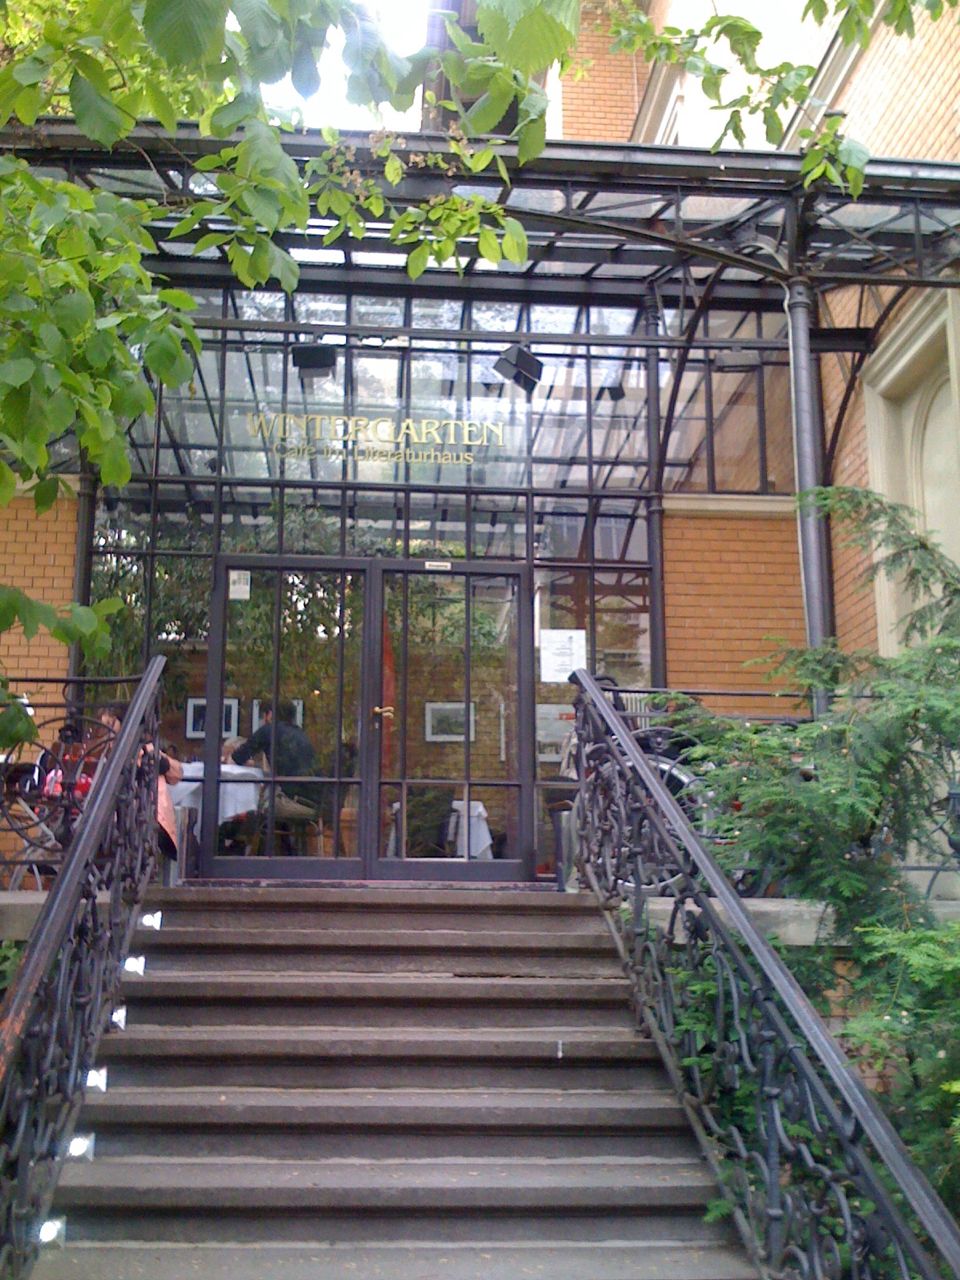 <!--:en-->A Quiet Cafe Oasis the” Wintergarden Literatur Haus”<!--:-->